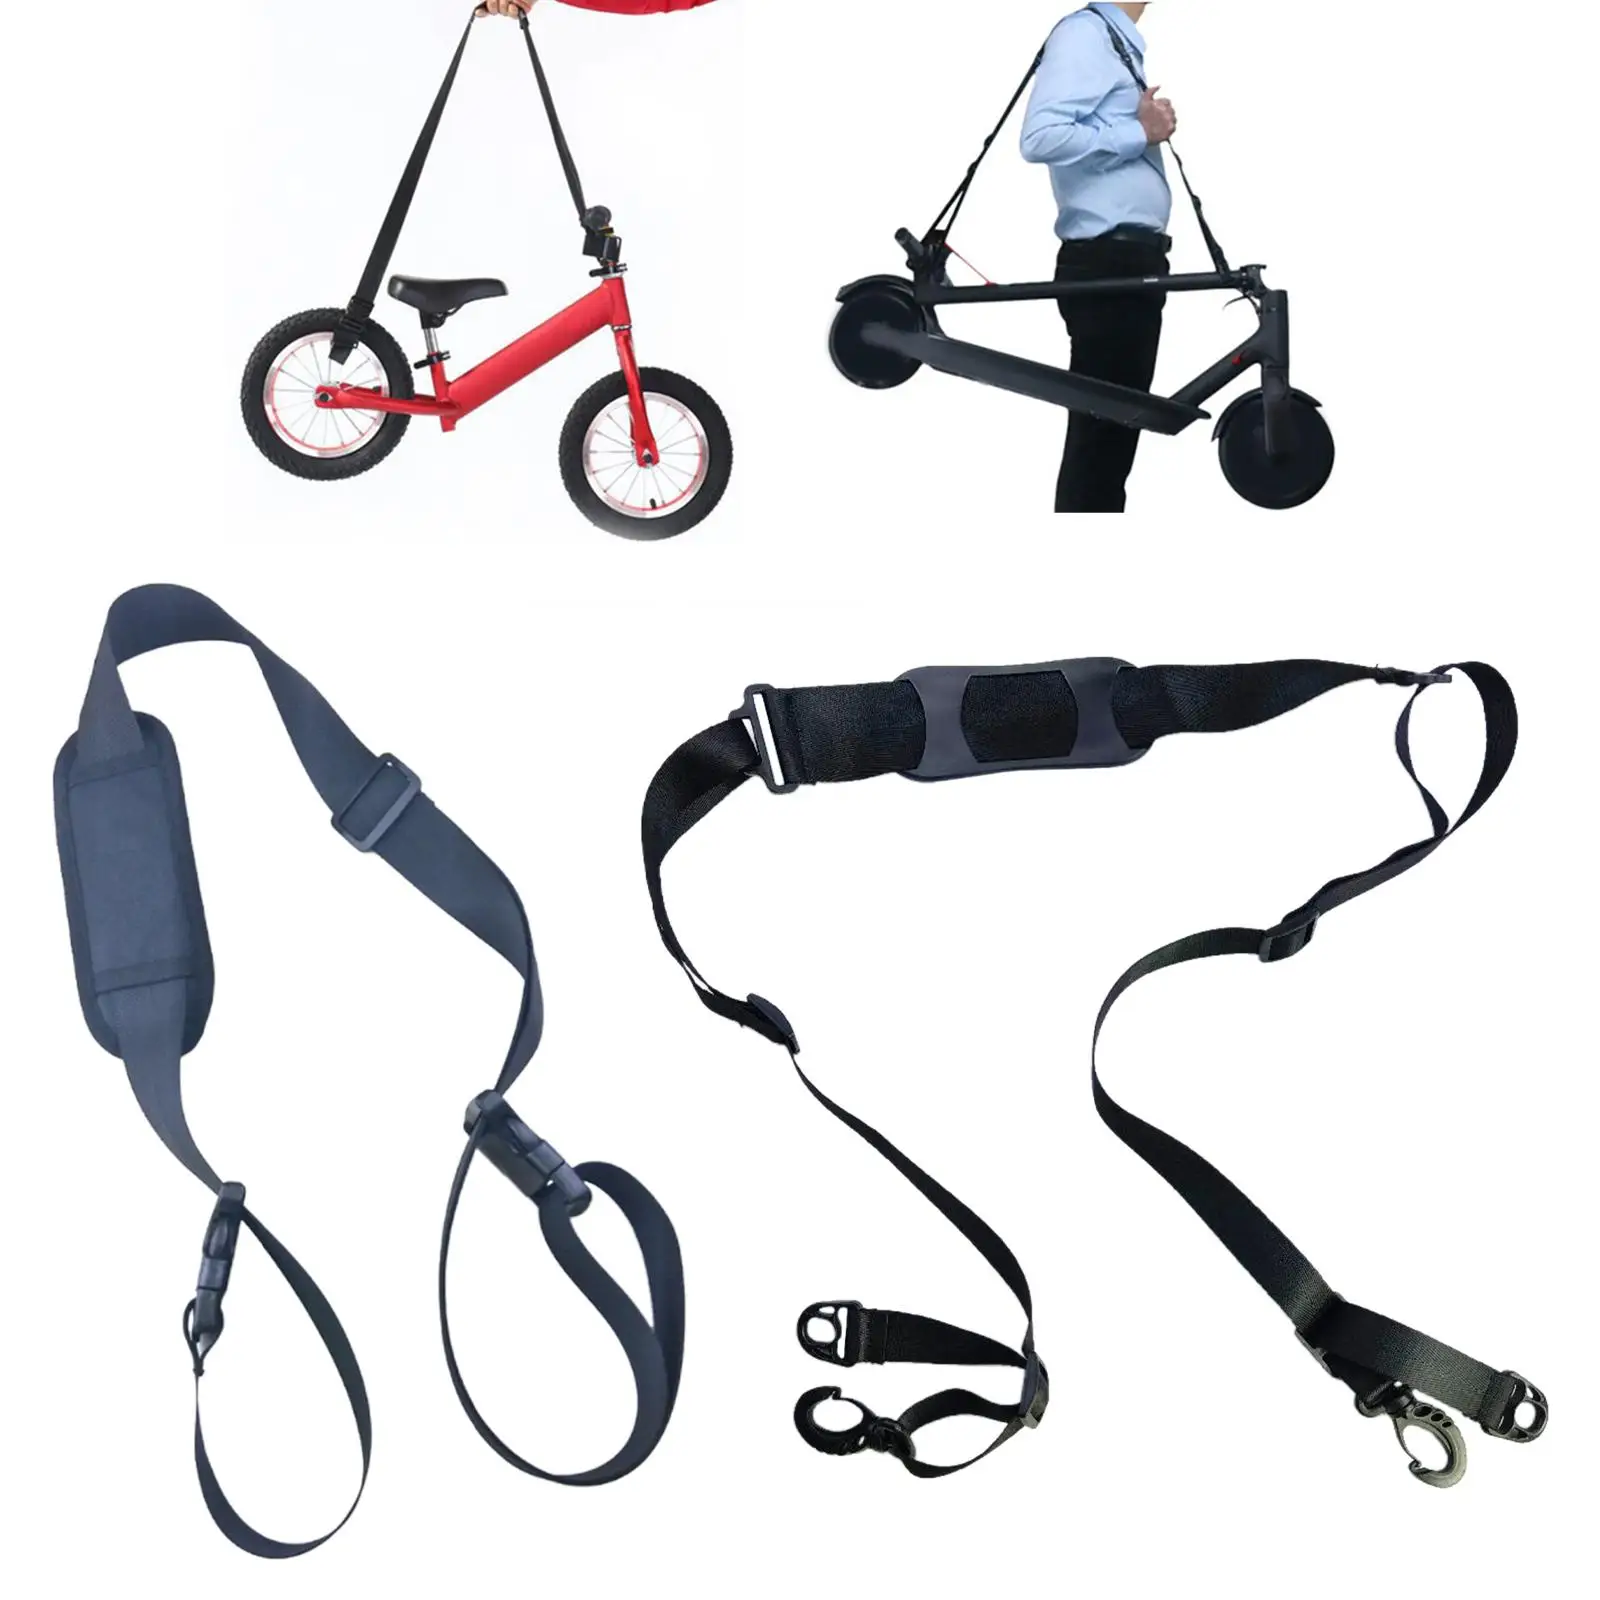 Beach Chair Carry Strap, Durable Shoulder Carrying Straps, Adjustable Shoulder